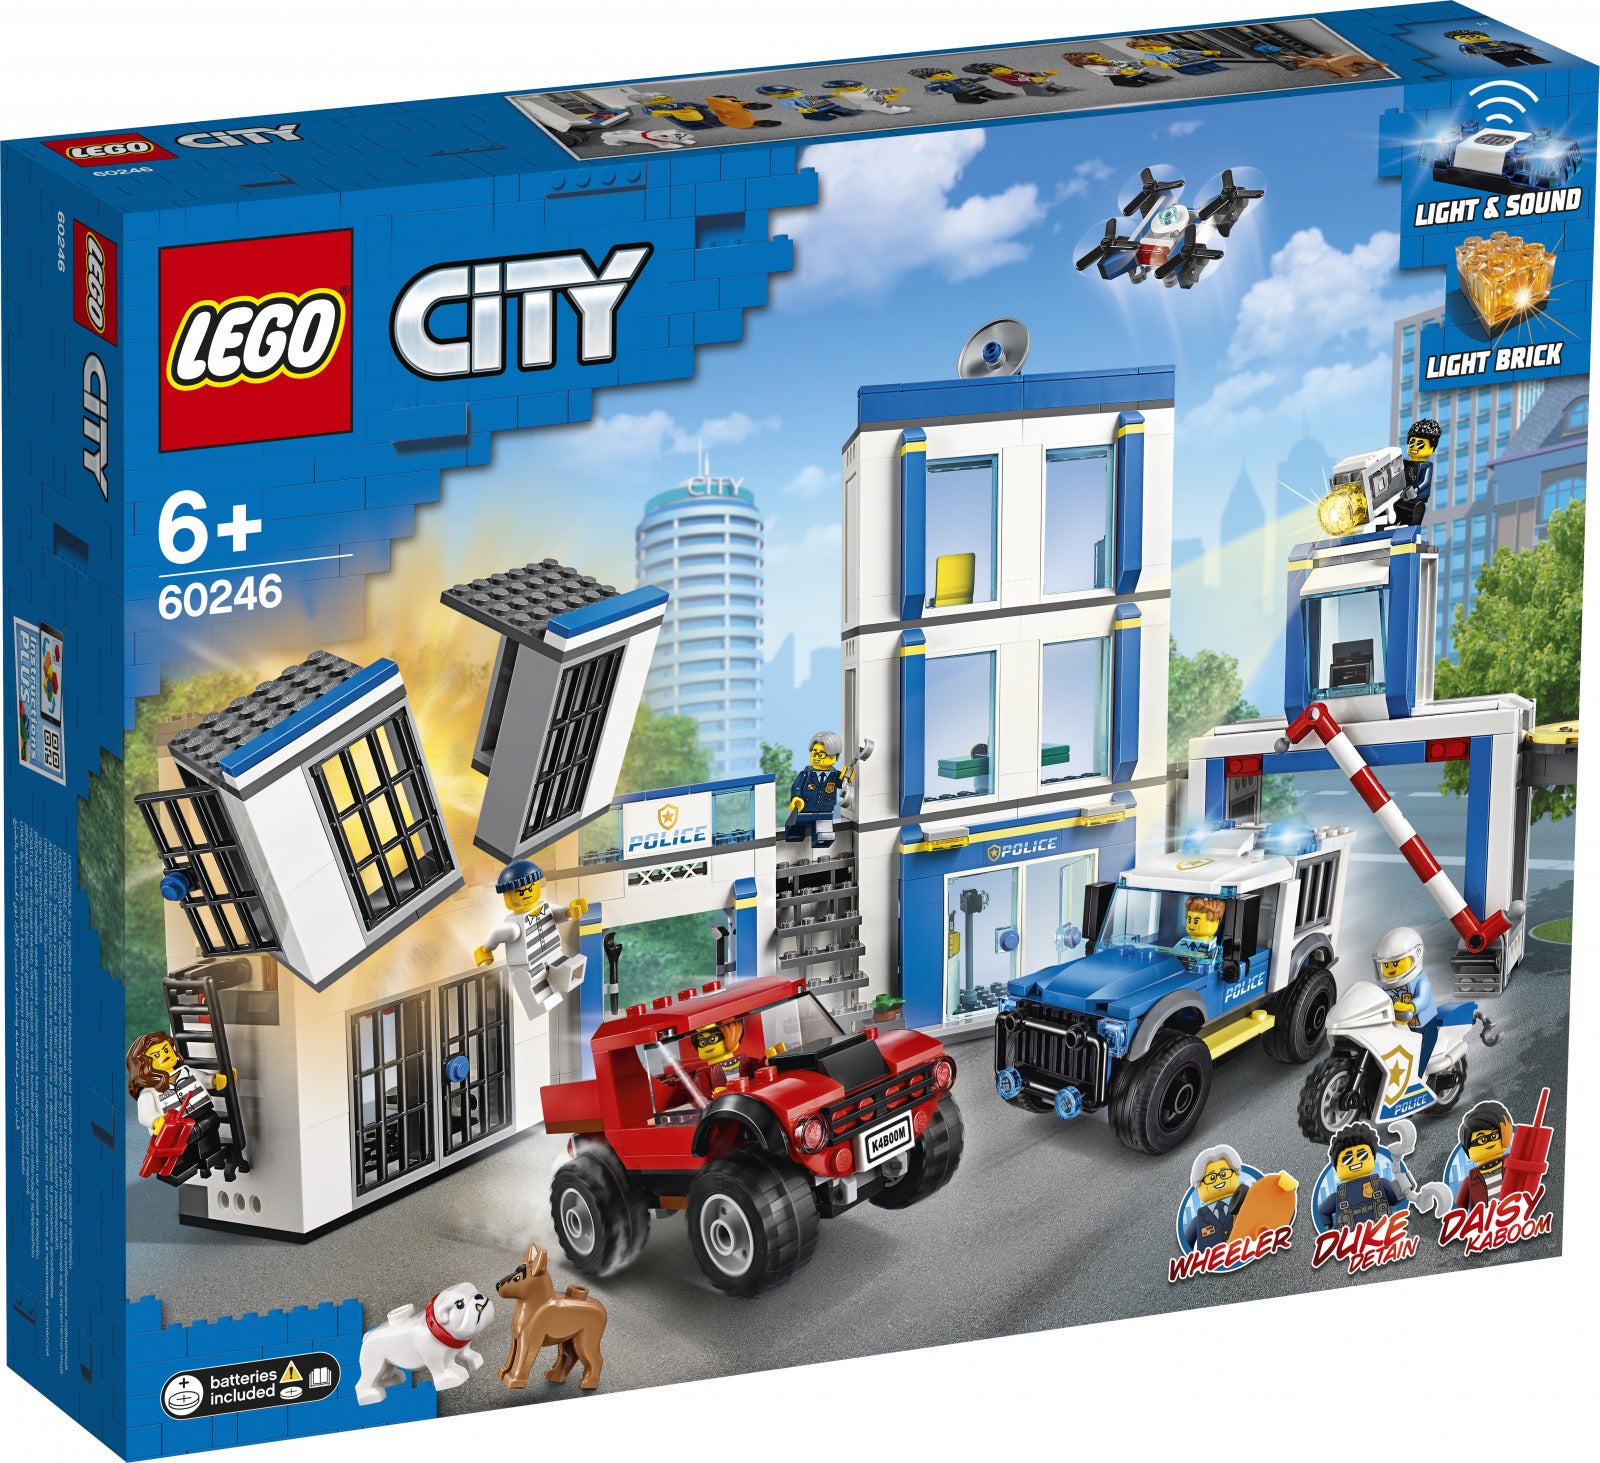 60246 LEGO City Police Station 2 Courtesy of The LEGO Group